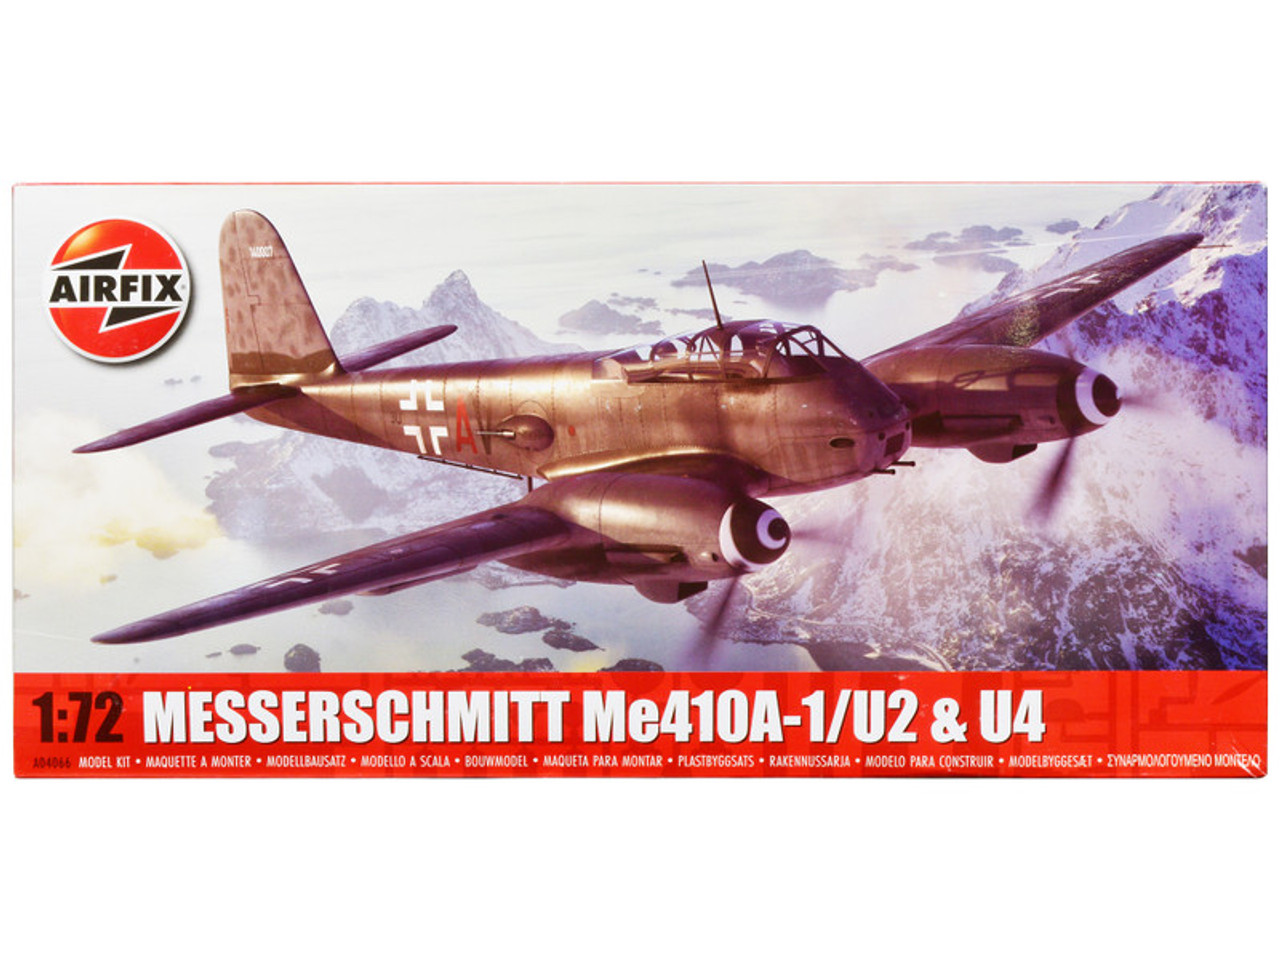 Level 2 Model Kit Messerschmitt Me410A-1/U2 & U4 Fighter-Bomber Aircraft with 2 Scheme Options 1/72 Plastic Model Kit by Airfix